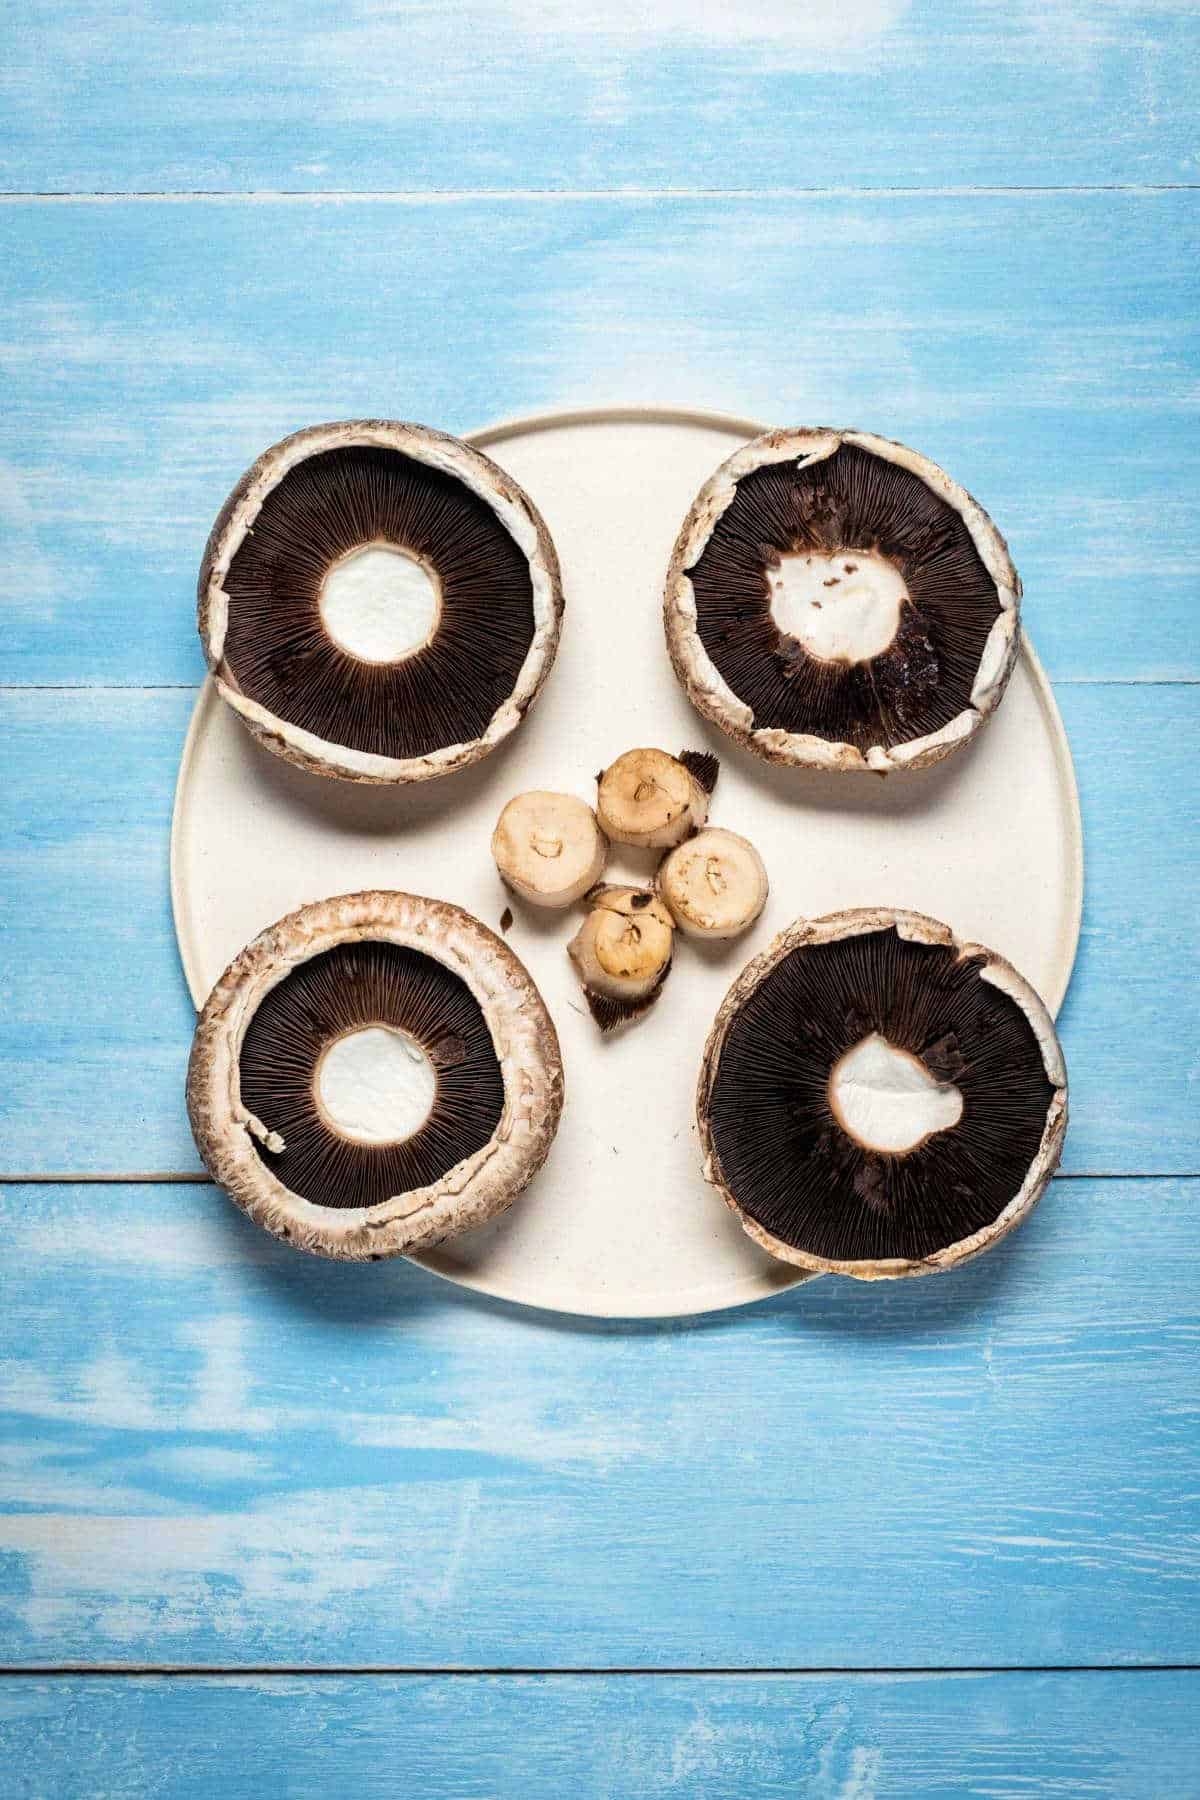 Portobello mushrooms with stems cut off on a white plate.